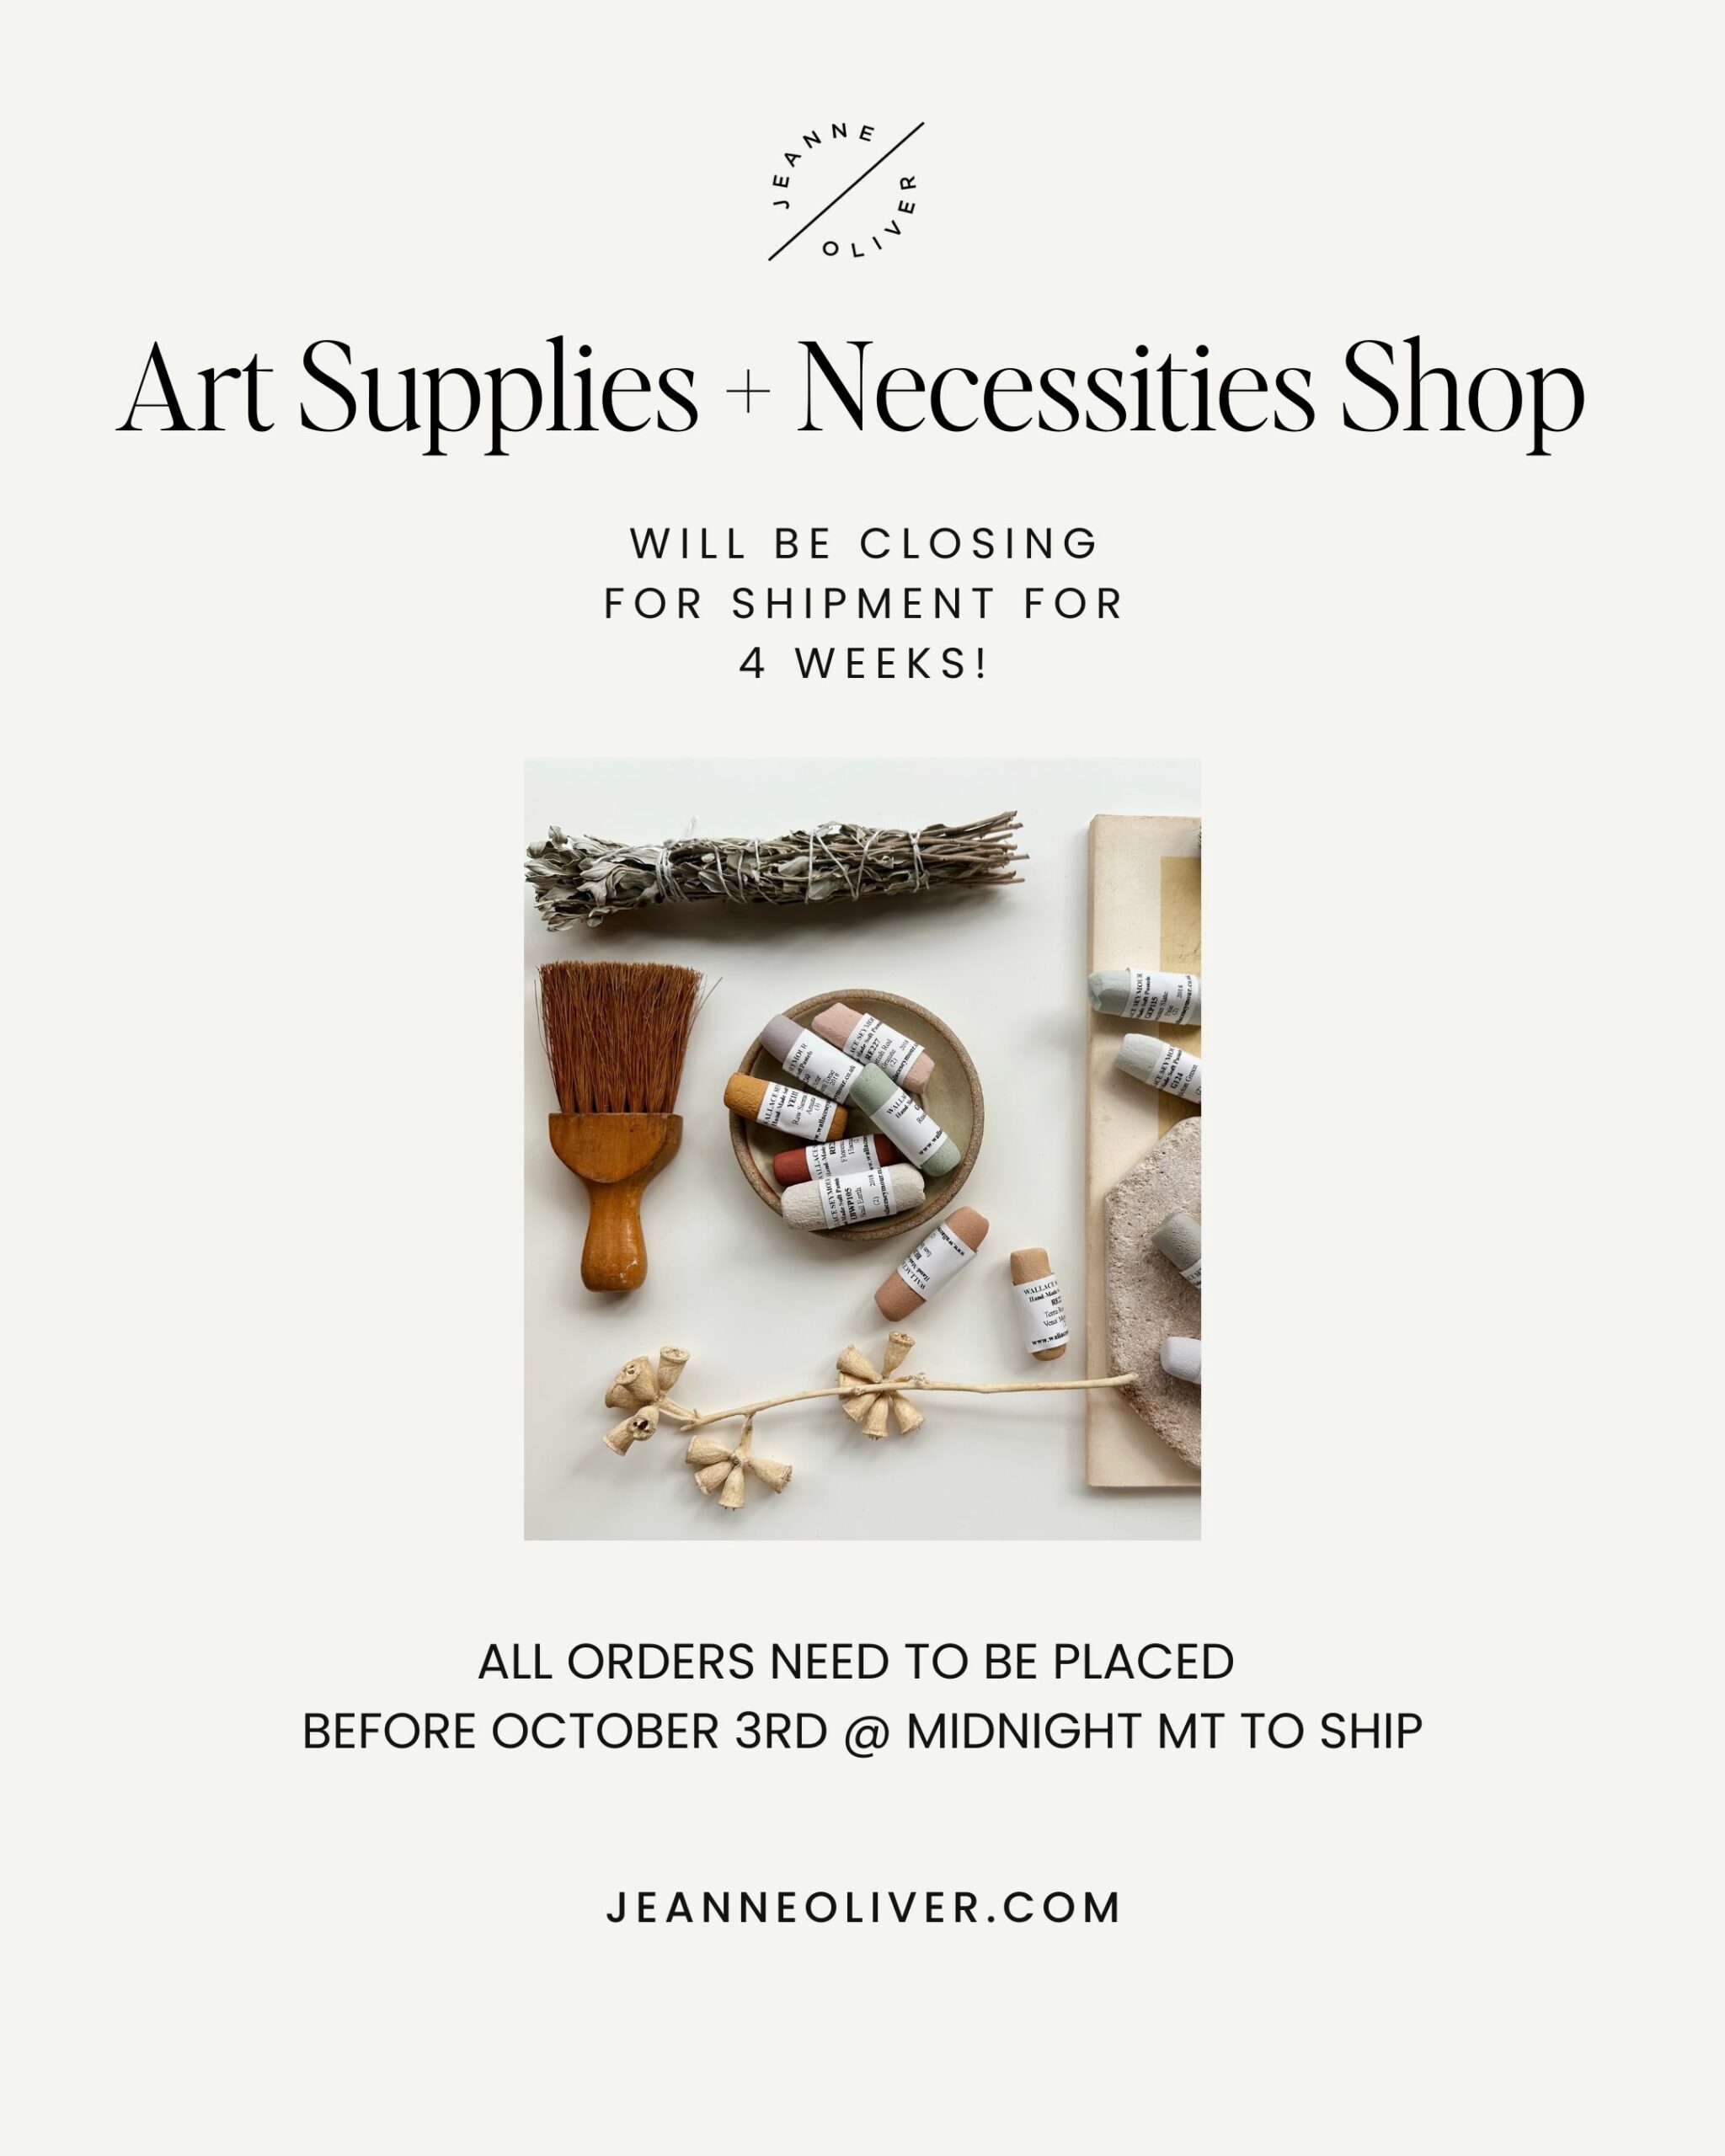 Art Supplies + Necessities Online Shop | Closing for 4 Weeks!